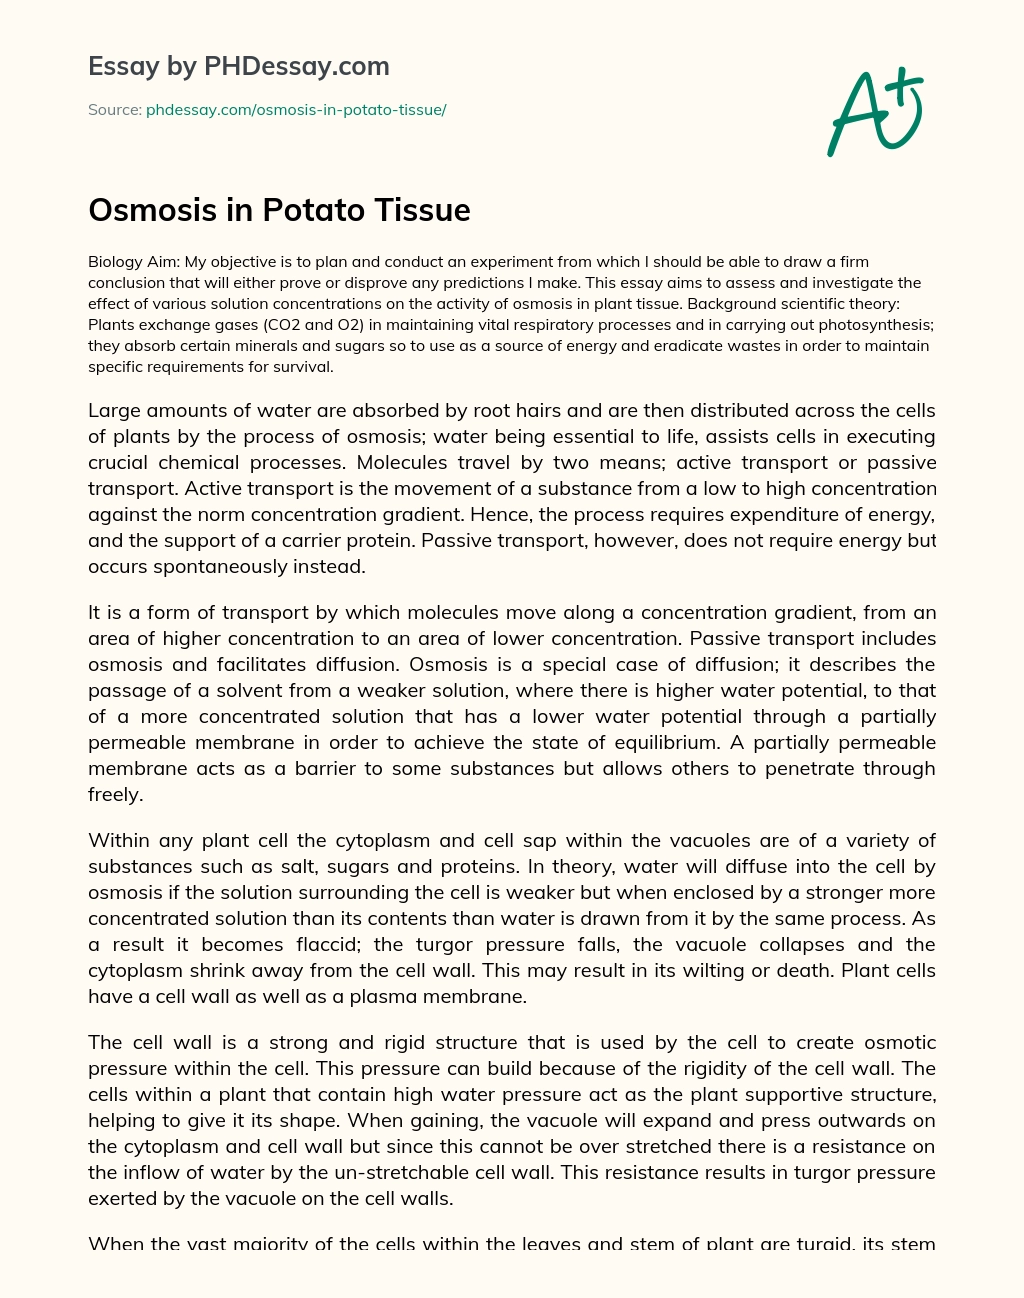 Osmosis in Potato Tissue essay